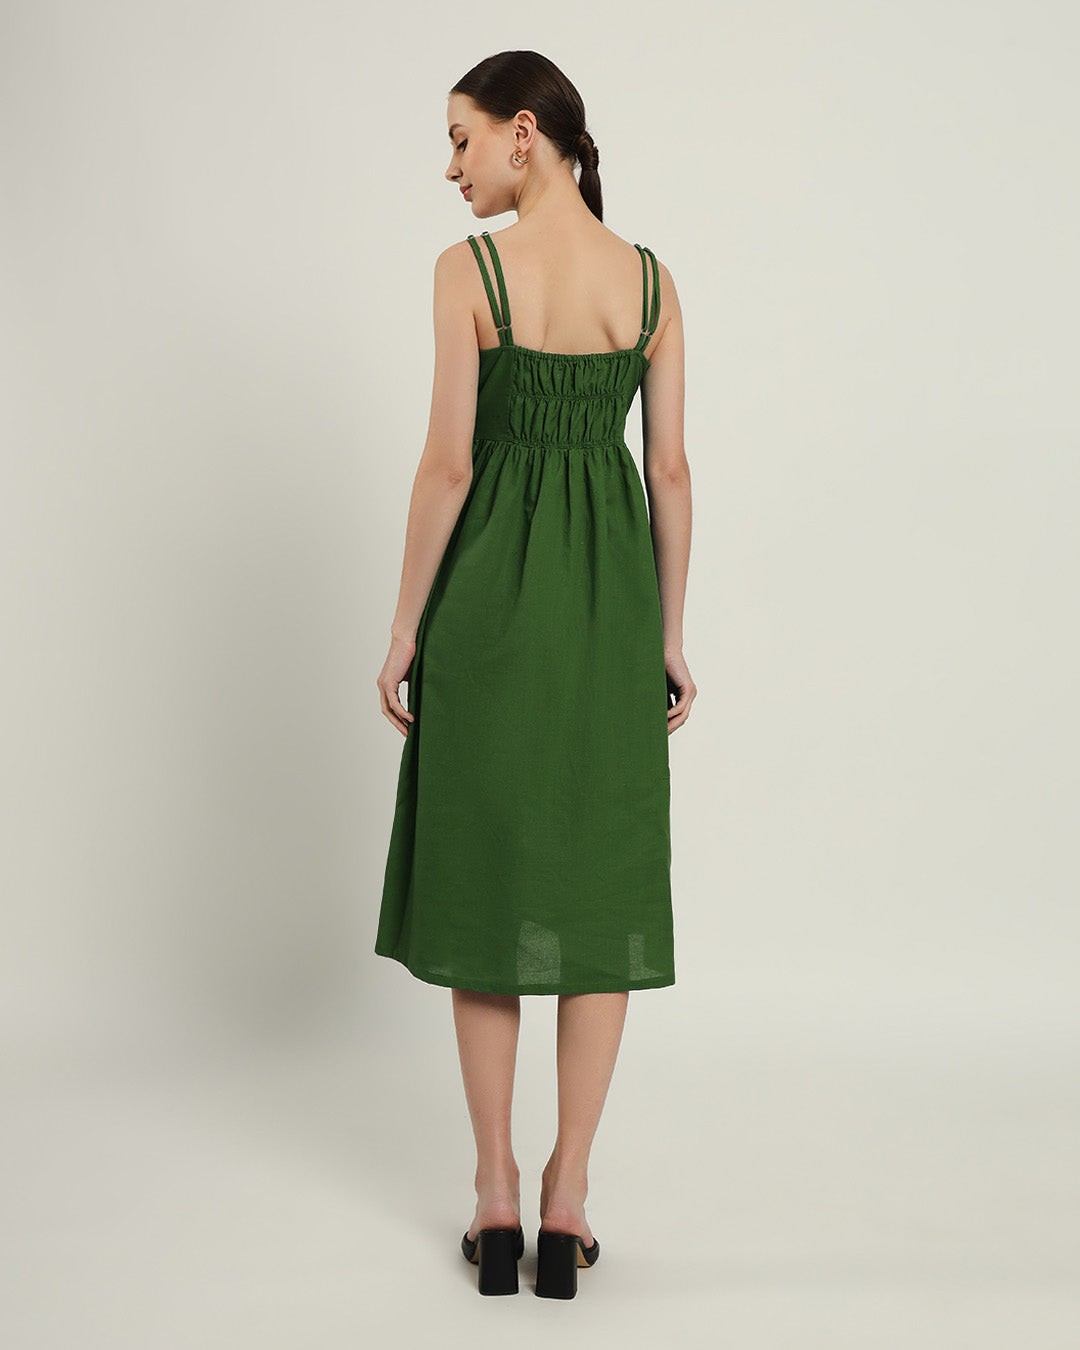 The Haiti Emerald Cotton Dress